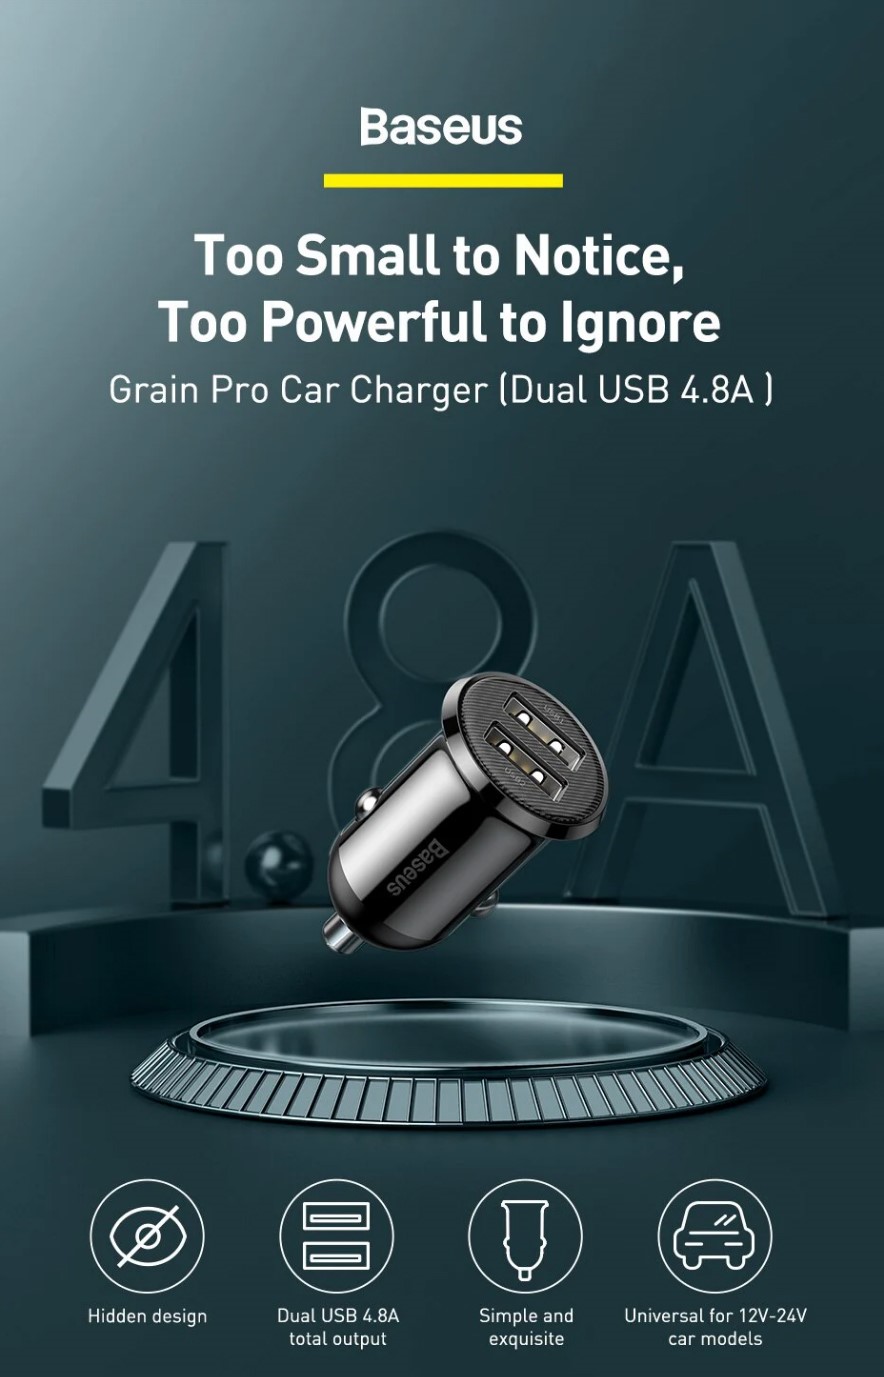 Baseus Grain Pro Dual USB 4.8A Car Charger CCALLP 02 3 2